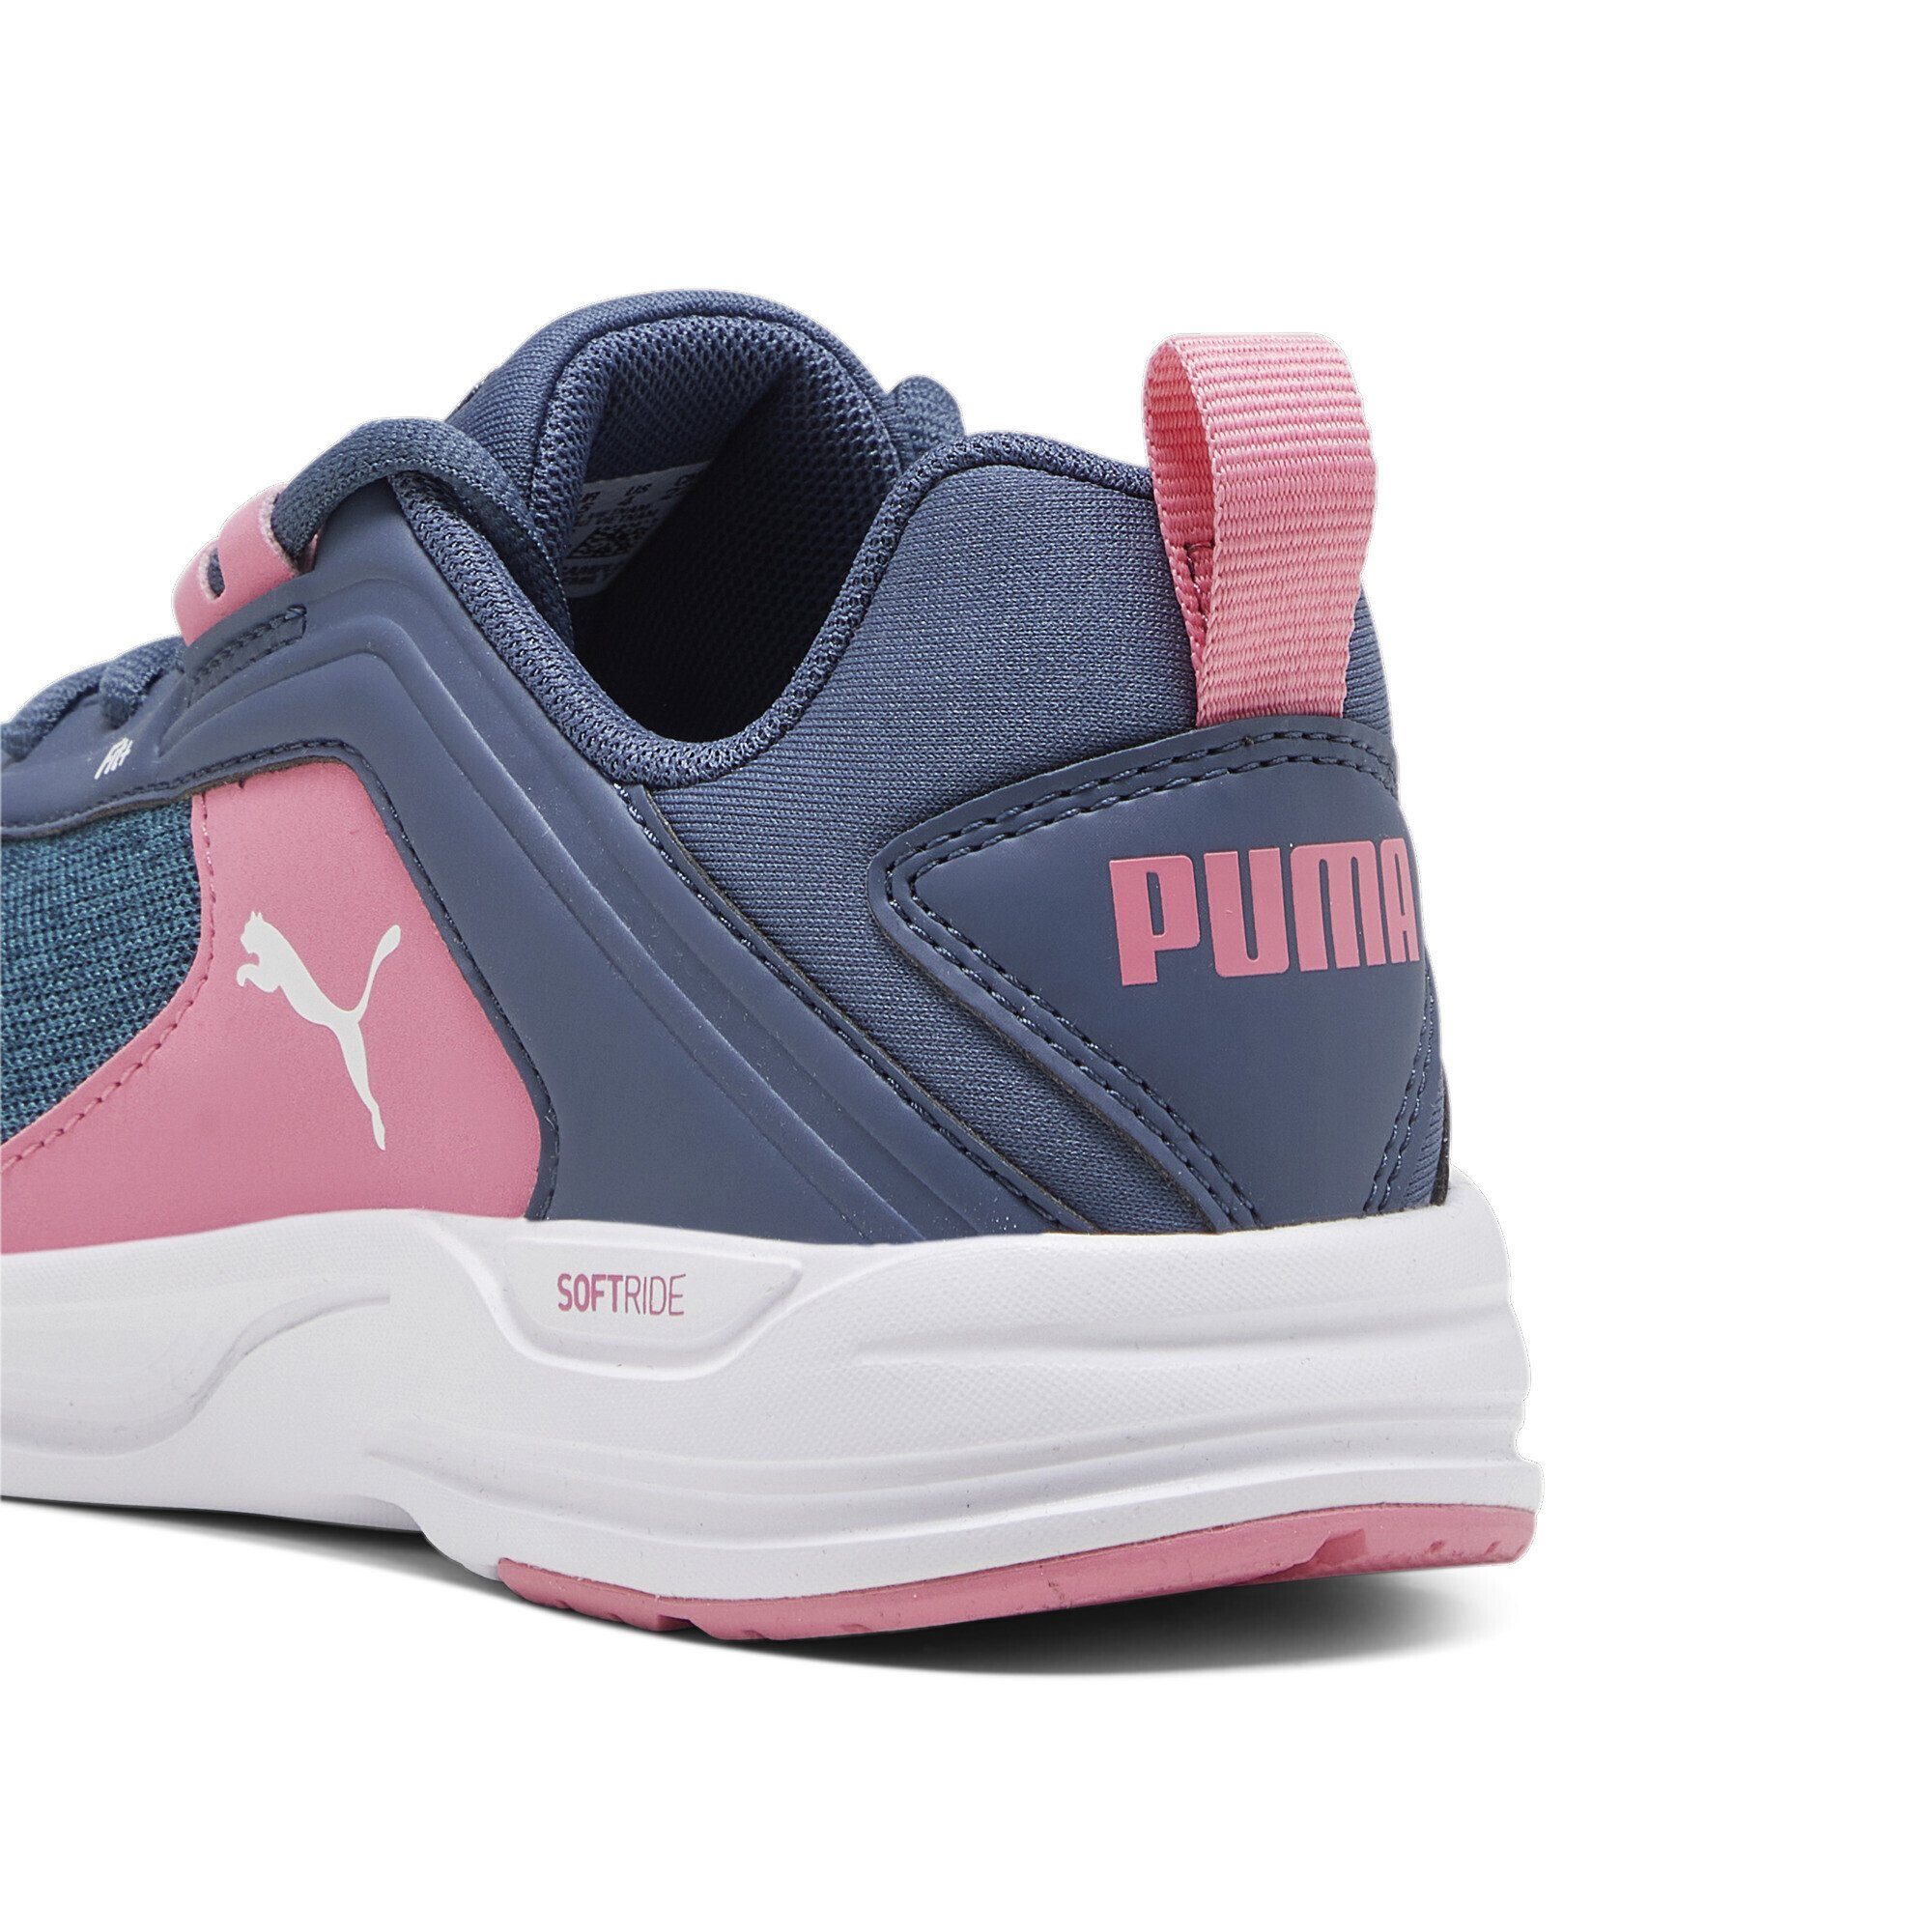 Burst PUMA Comet Pink Blue Inky Laufschuh Sneaker Strawberry Alt Jugendliche 2